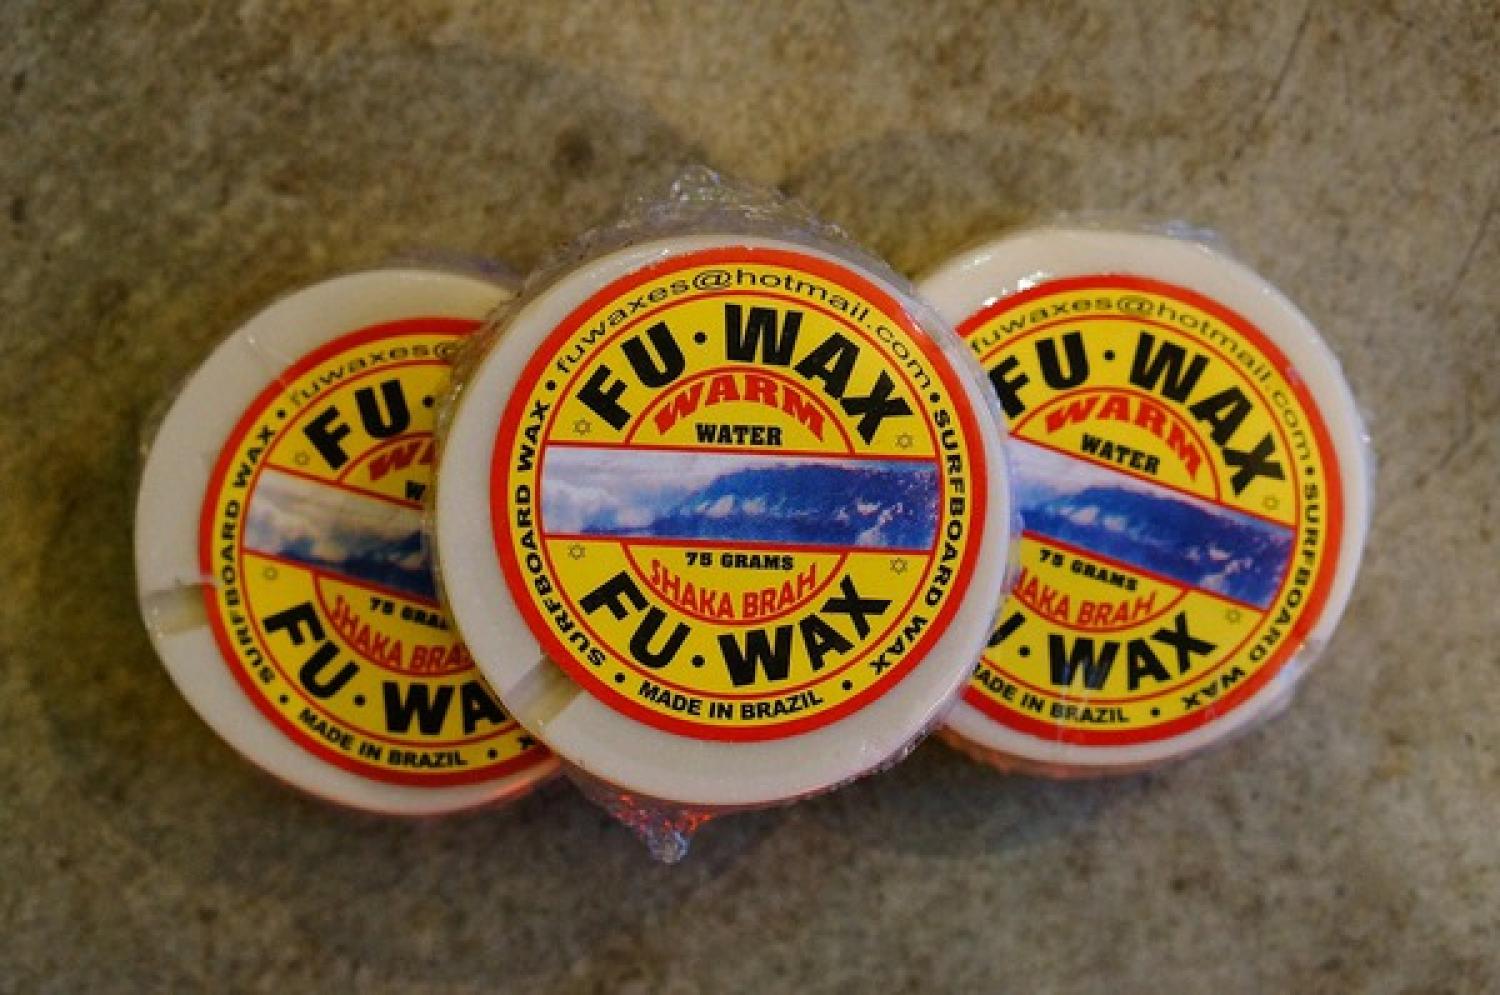 Very popular "FU WAX WARM type" arrival